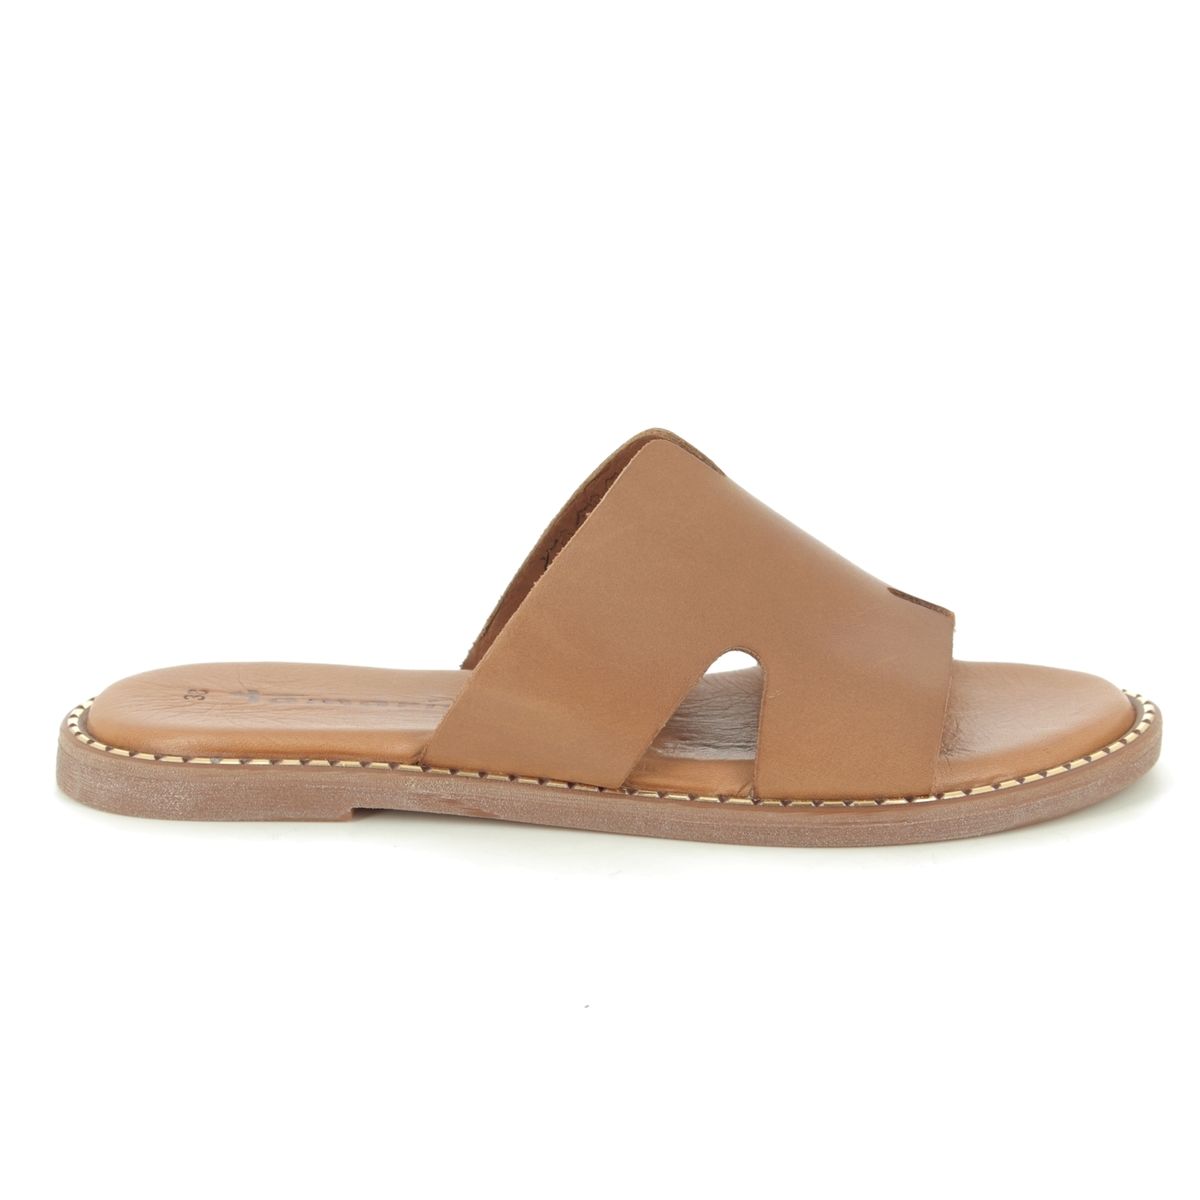 Tamaris Toffy 27135-24-305 Leather Slide Sandals